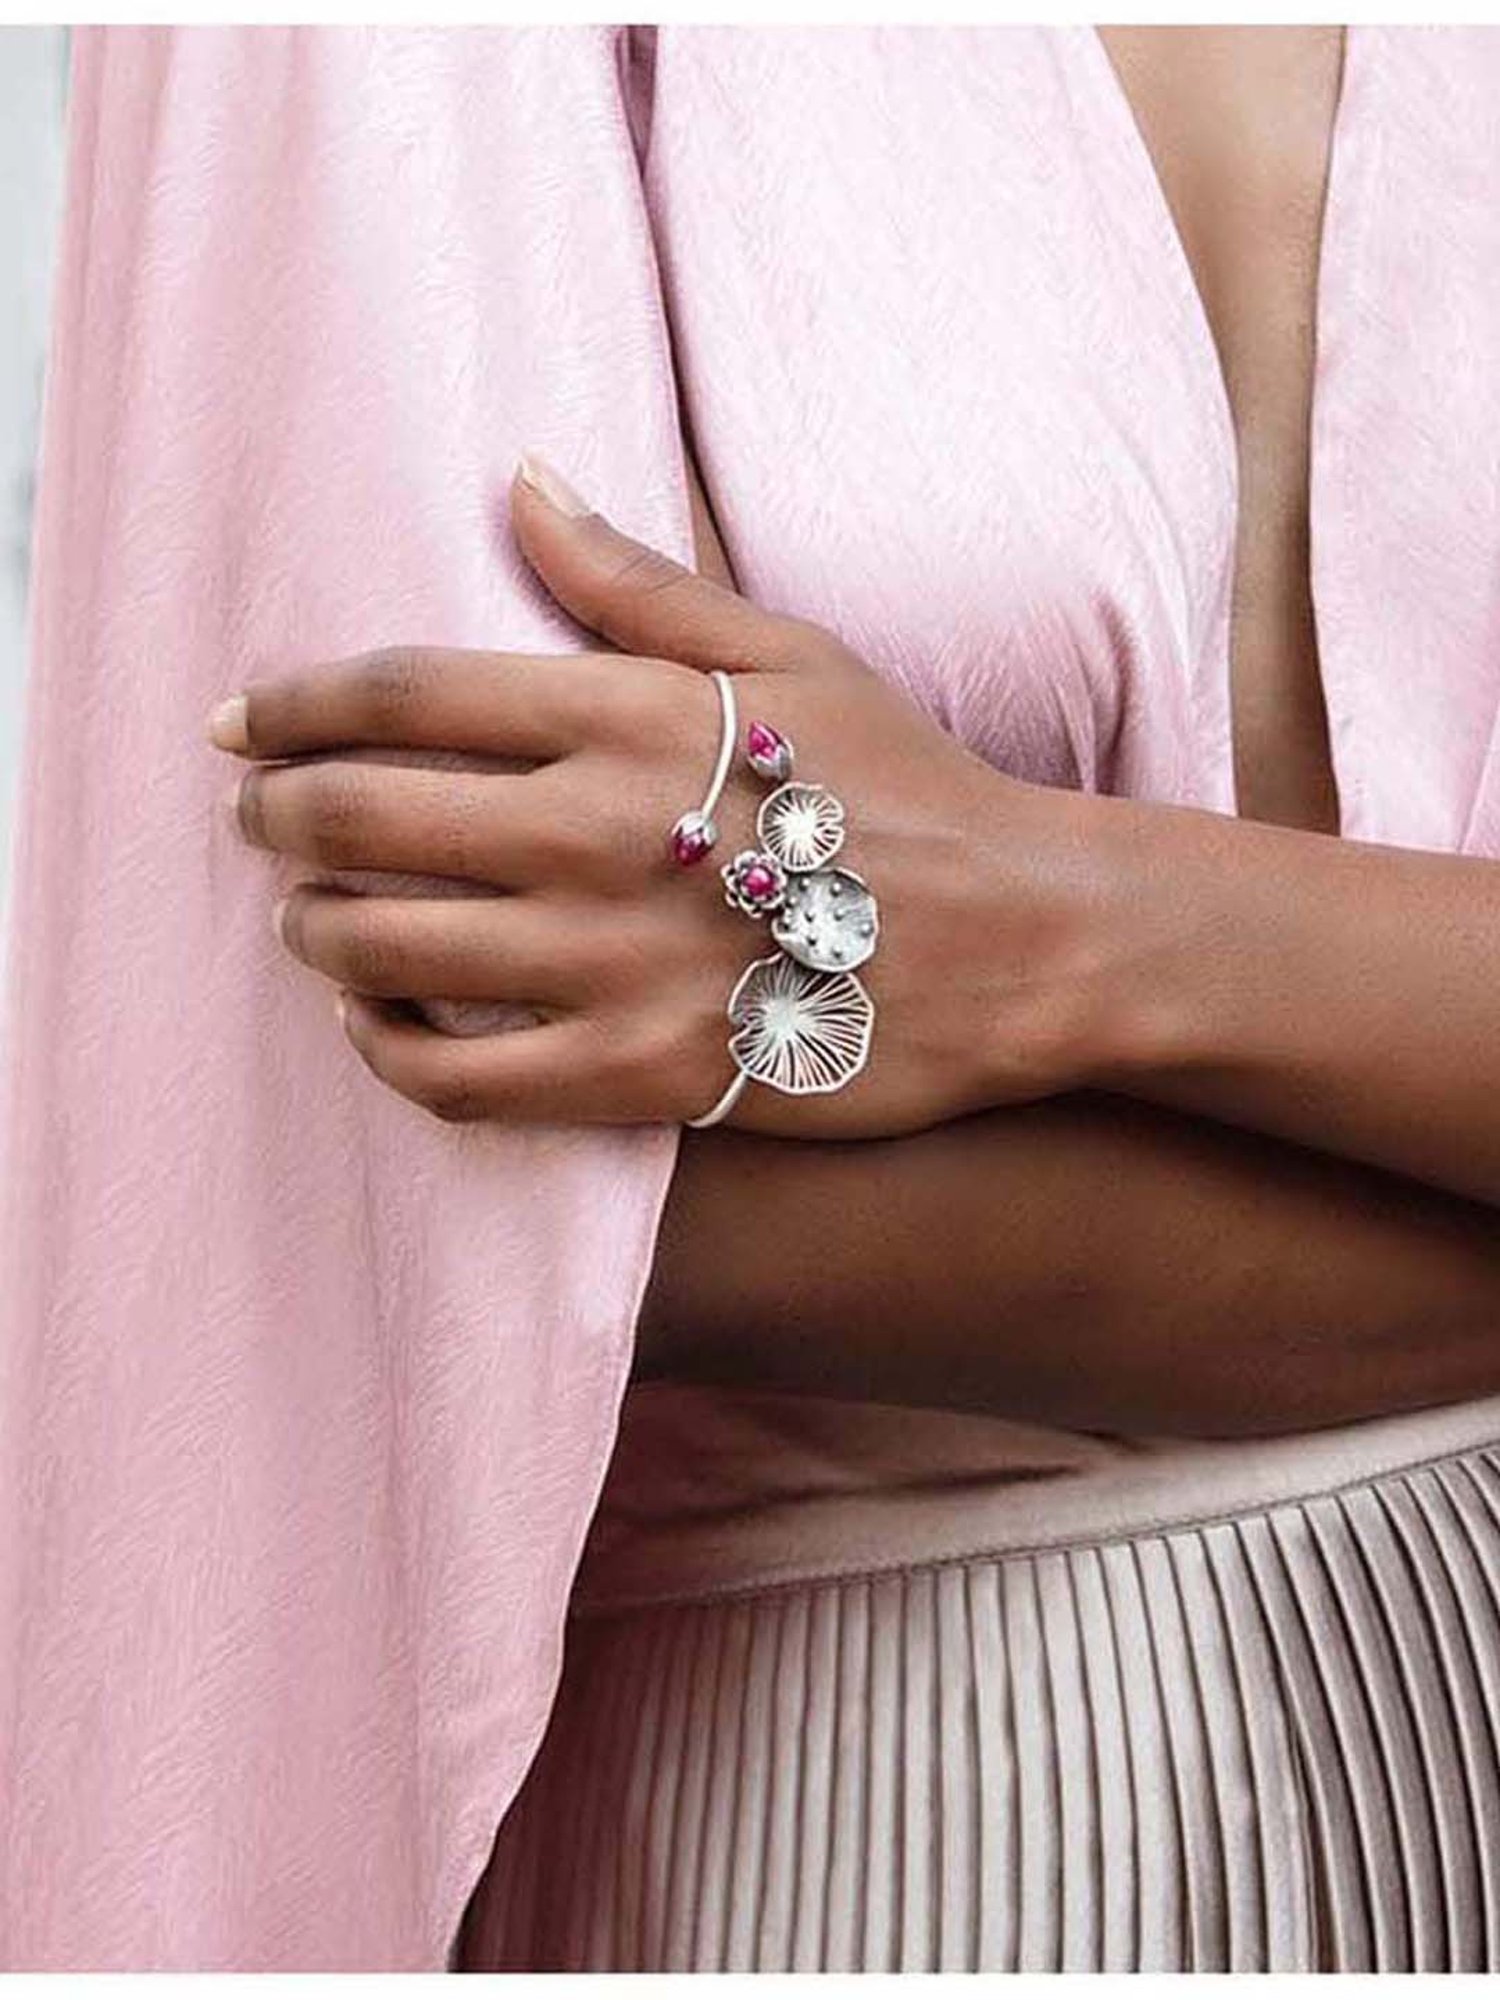 Palm Cuffs and Handlets A New Kind of Bracelet  Vogue  Vogue